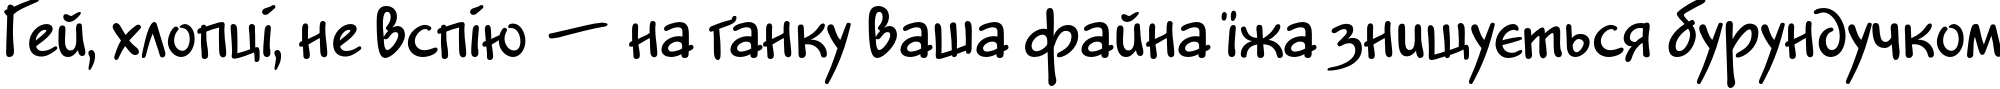 Пример написания шрифтом Jakob Bold текста на украинском